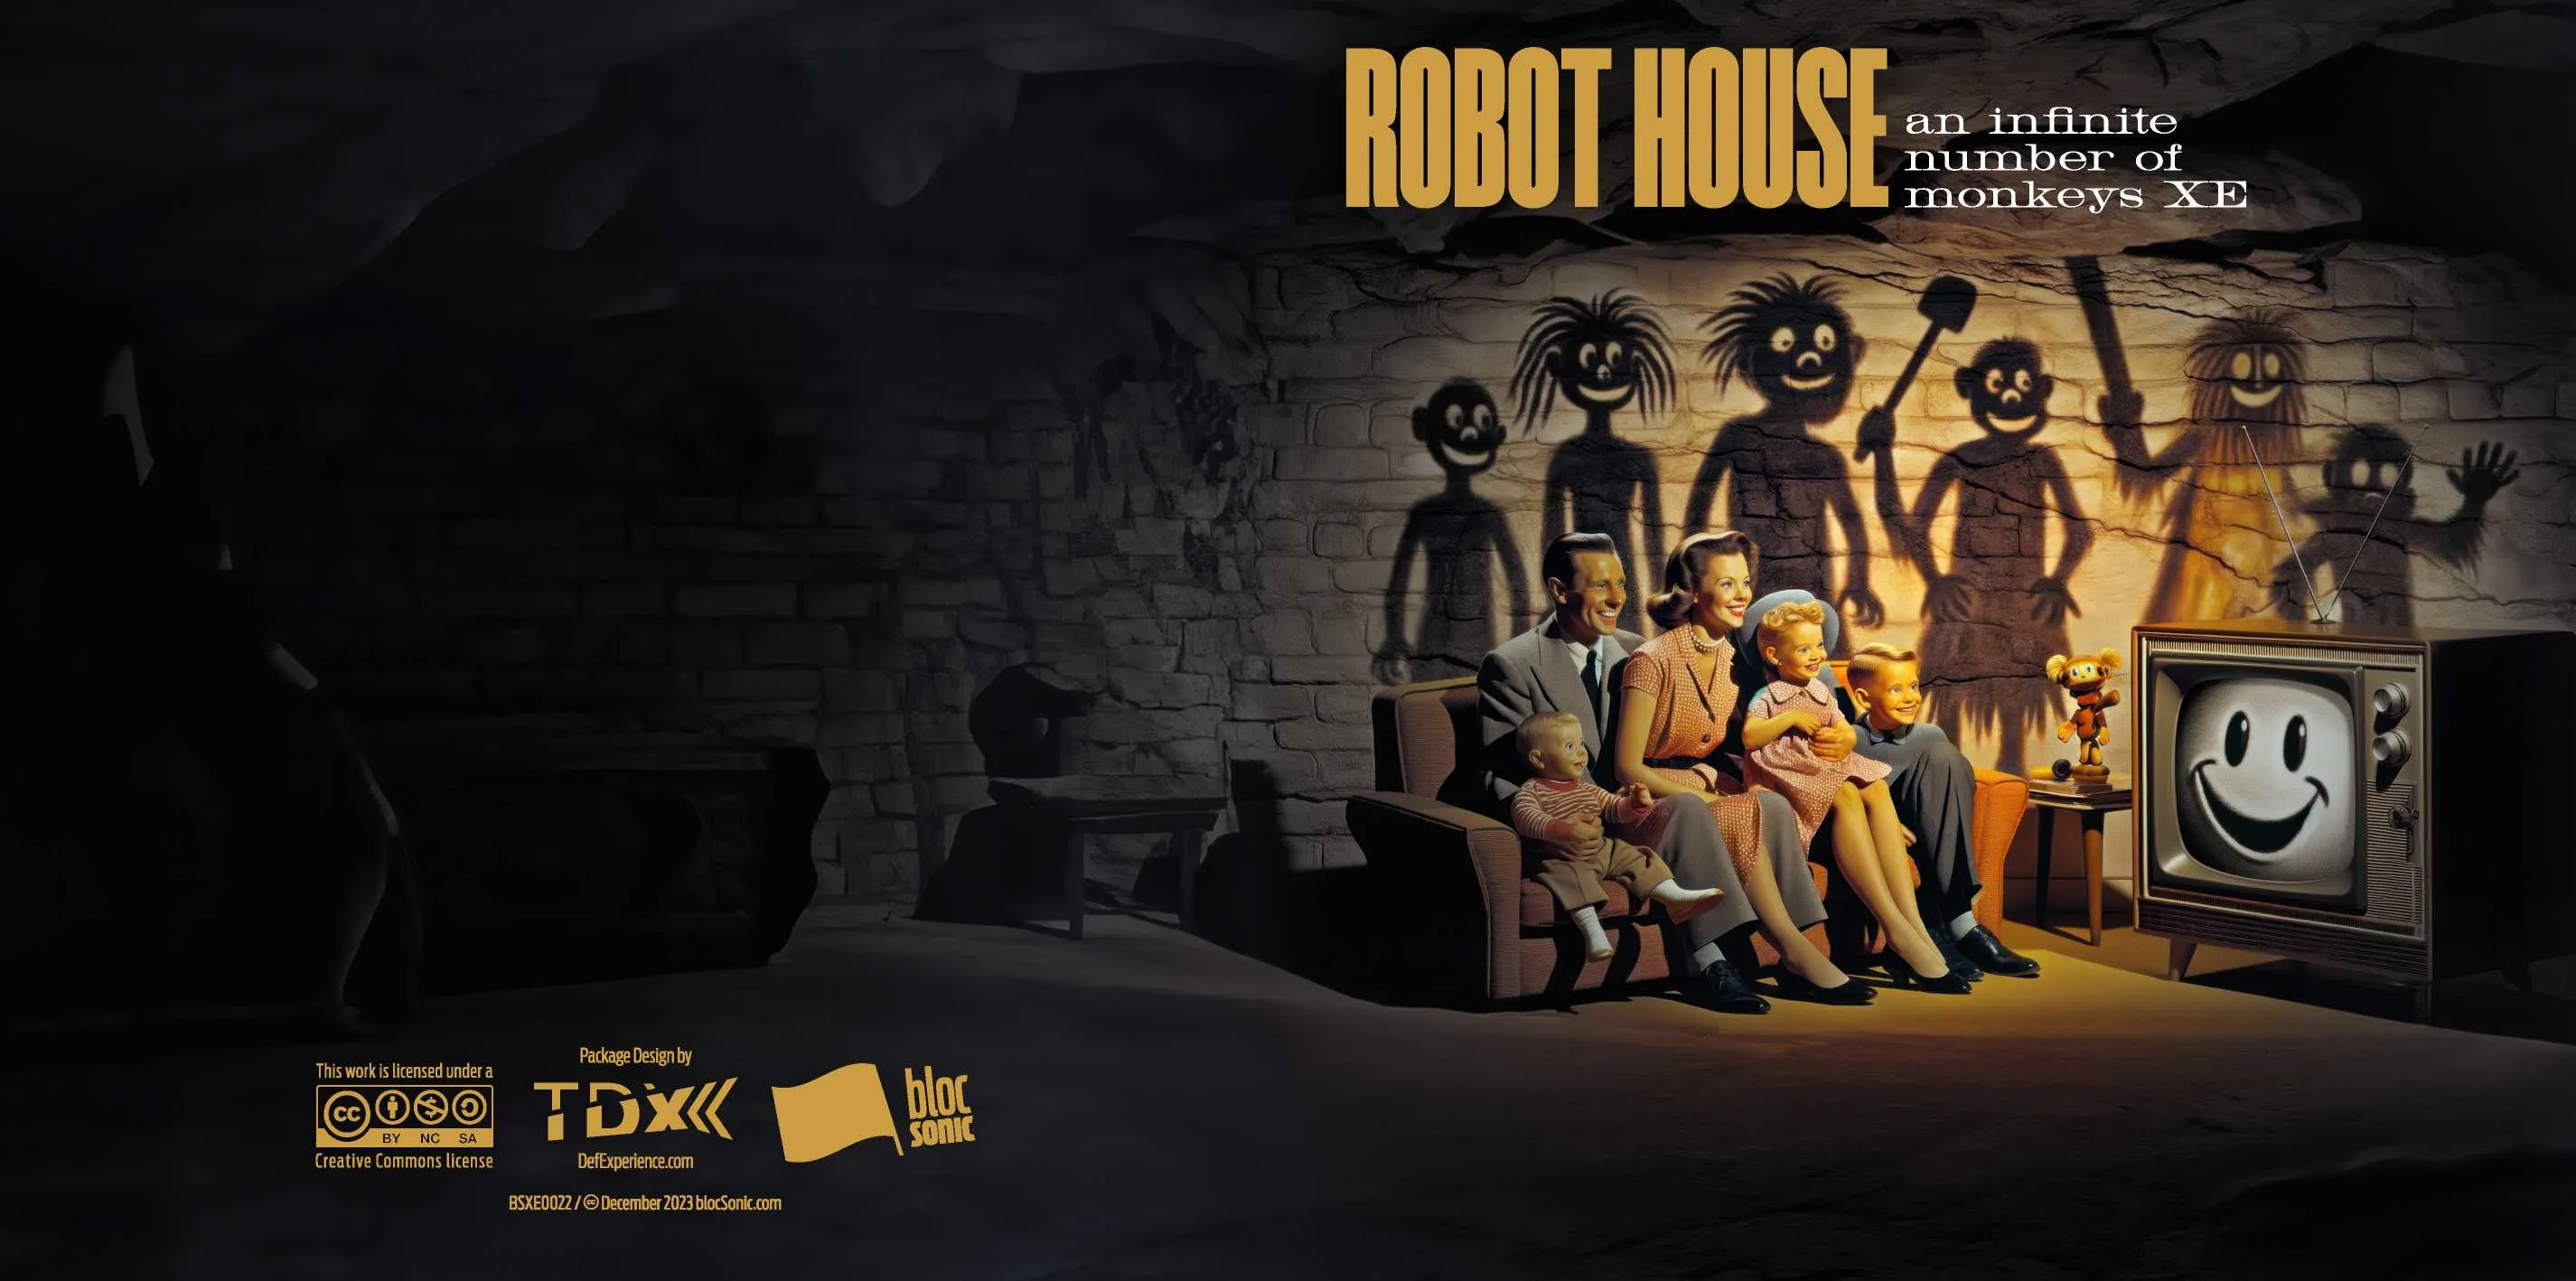 Album insert for “An Infinite Number Of Monkeys XE” by Robot House